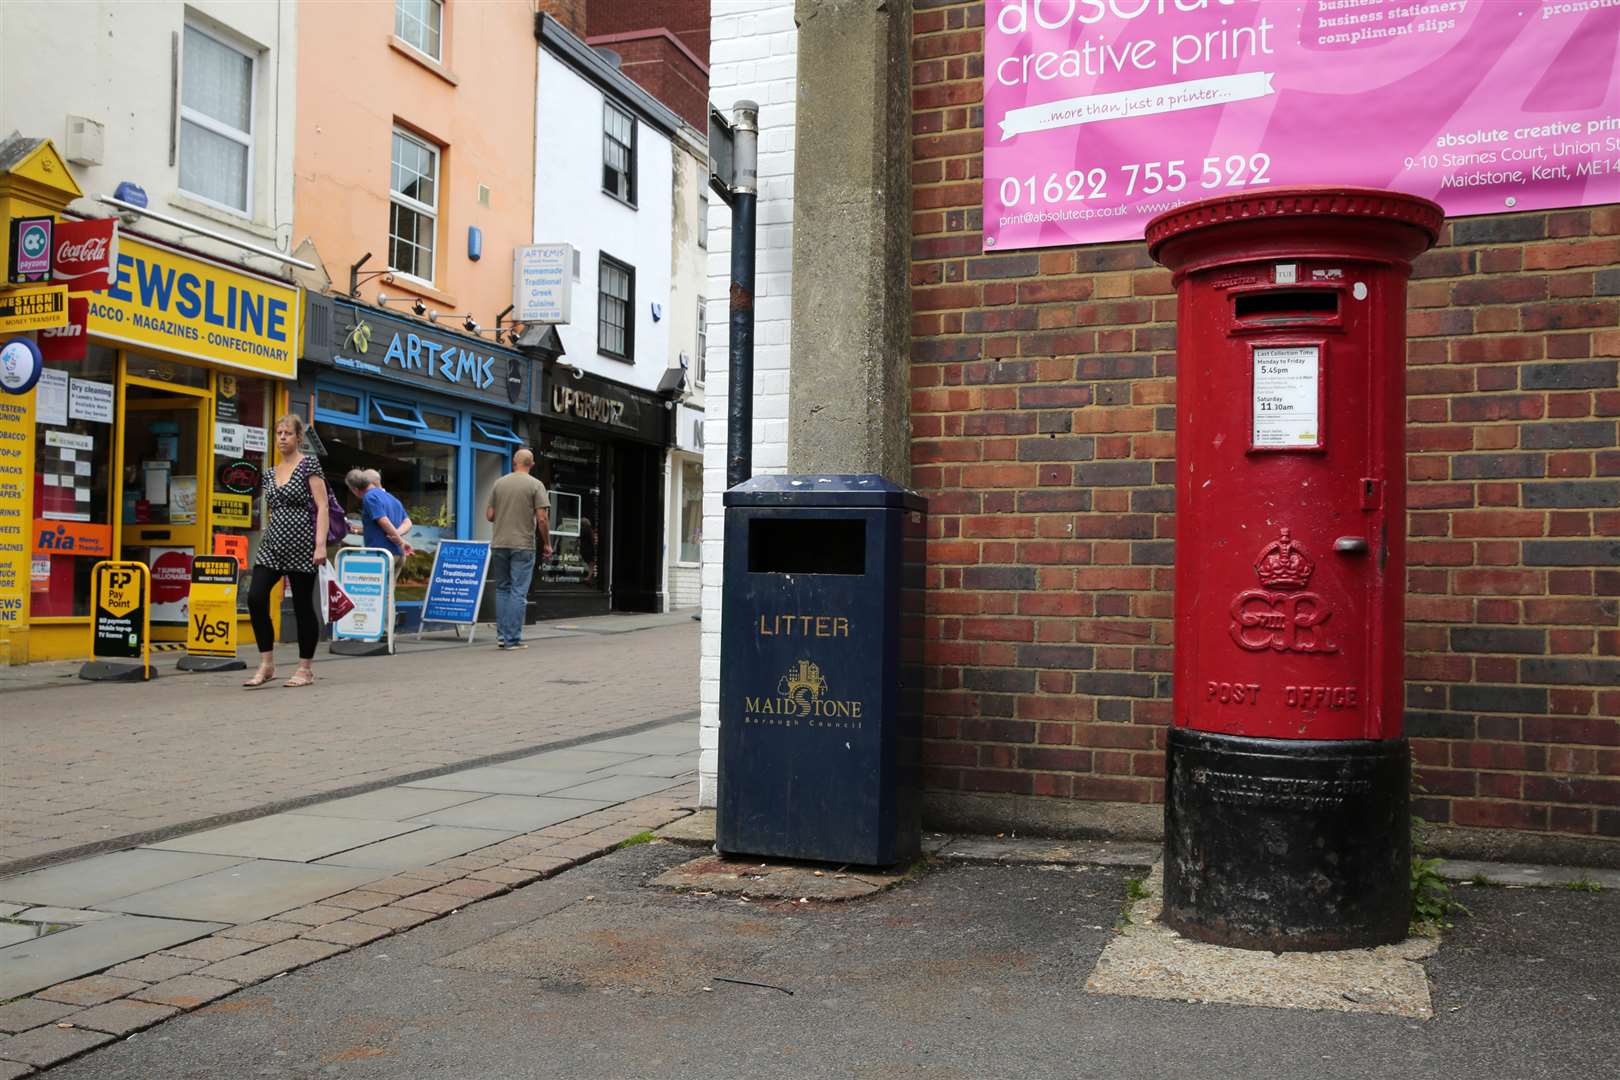 The rare Edward VIII postbox